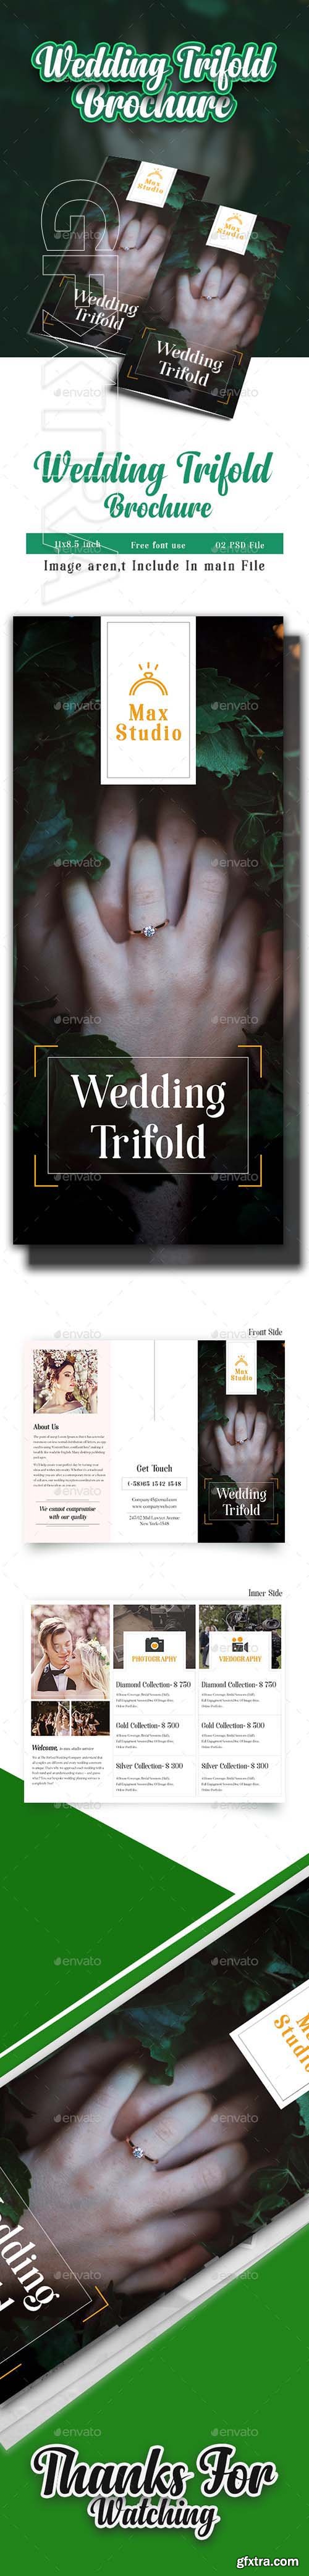 GraphicRiver - Wedding Trifold Brochure 20932255